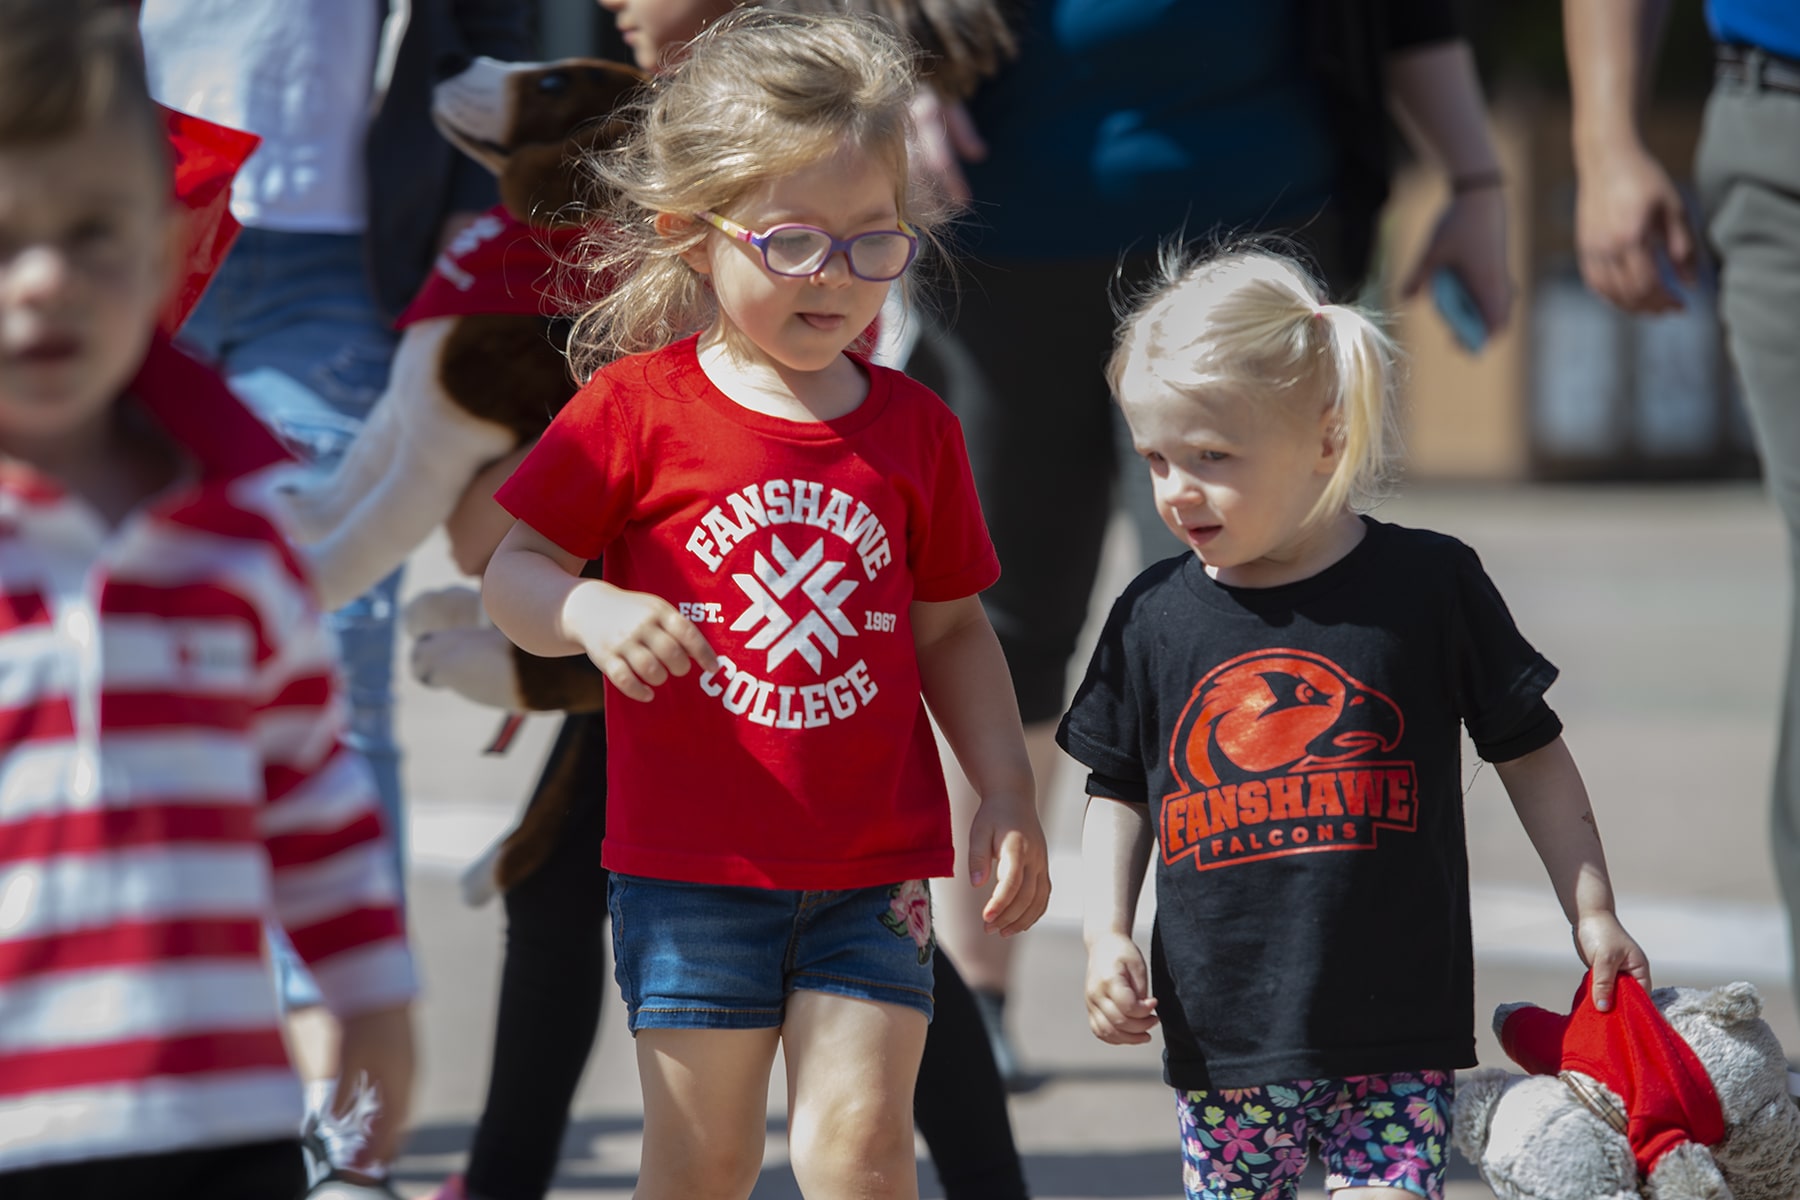 two small children walk side by side in fanshawe tshirts